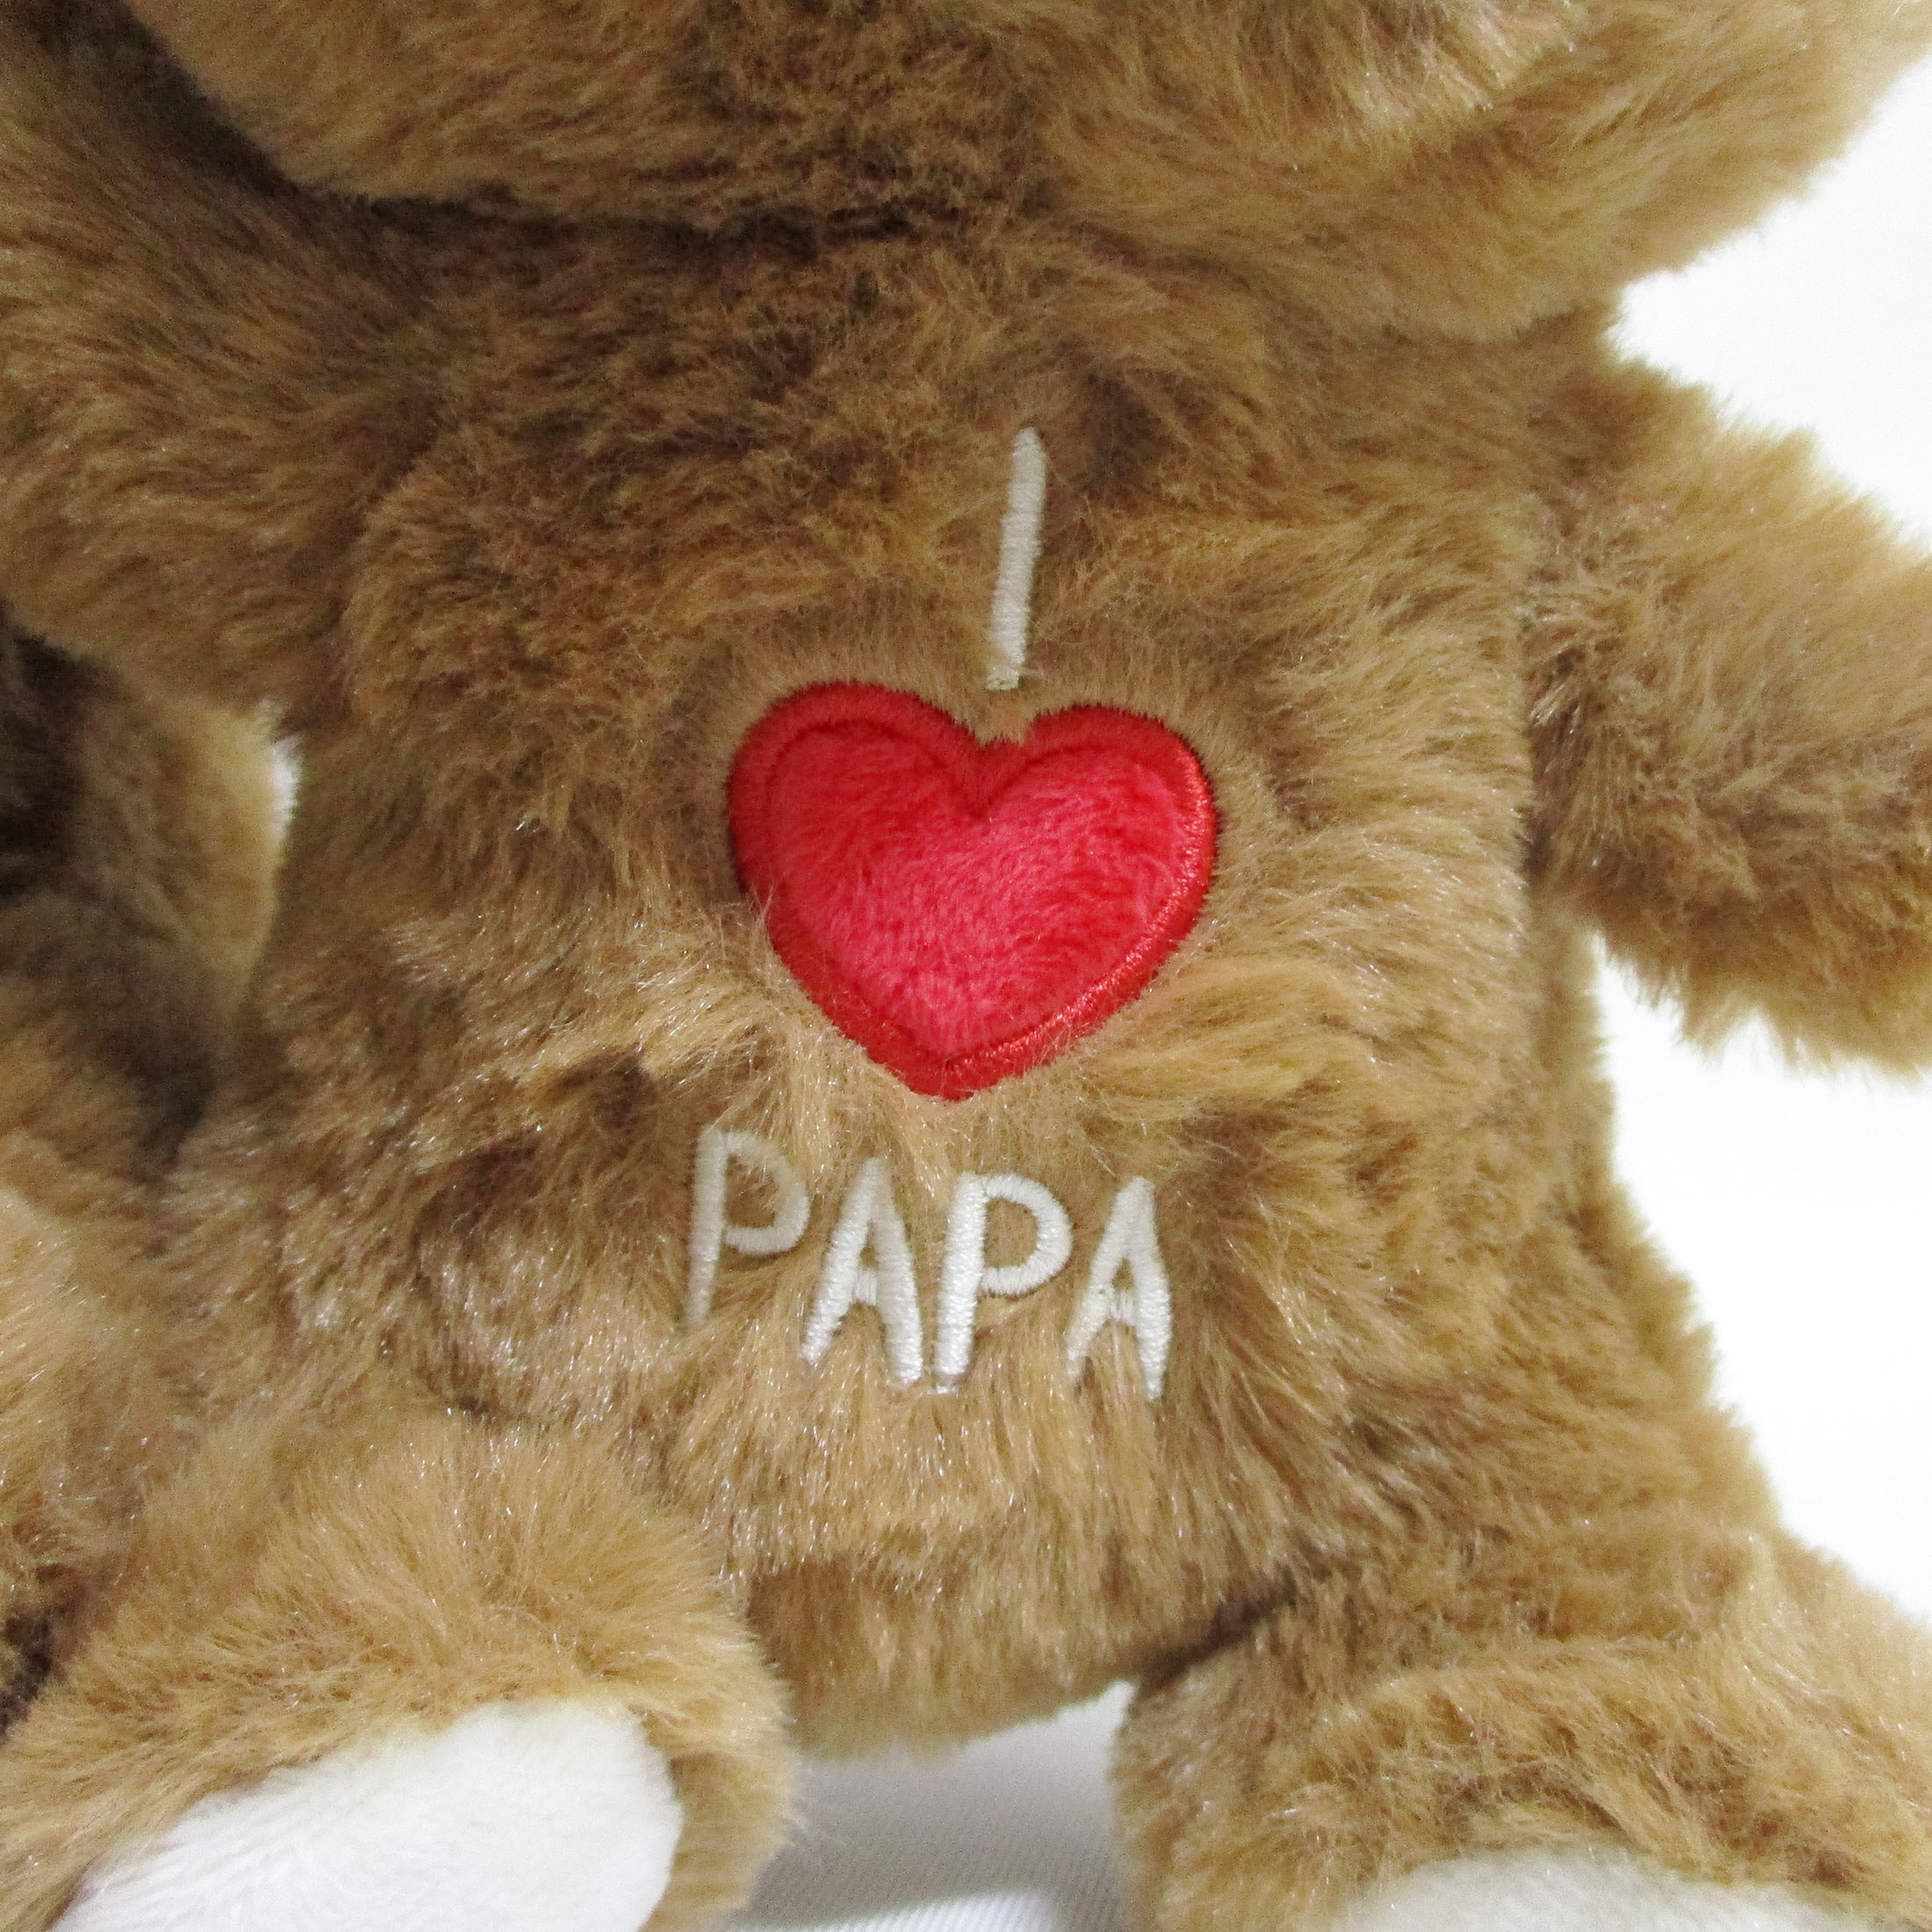 Father's Day Bear Plush & Papa Bear Ceramic Mug Gift Set - Way to Celebrate  